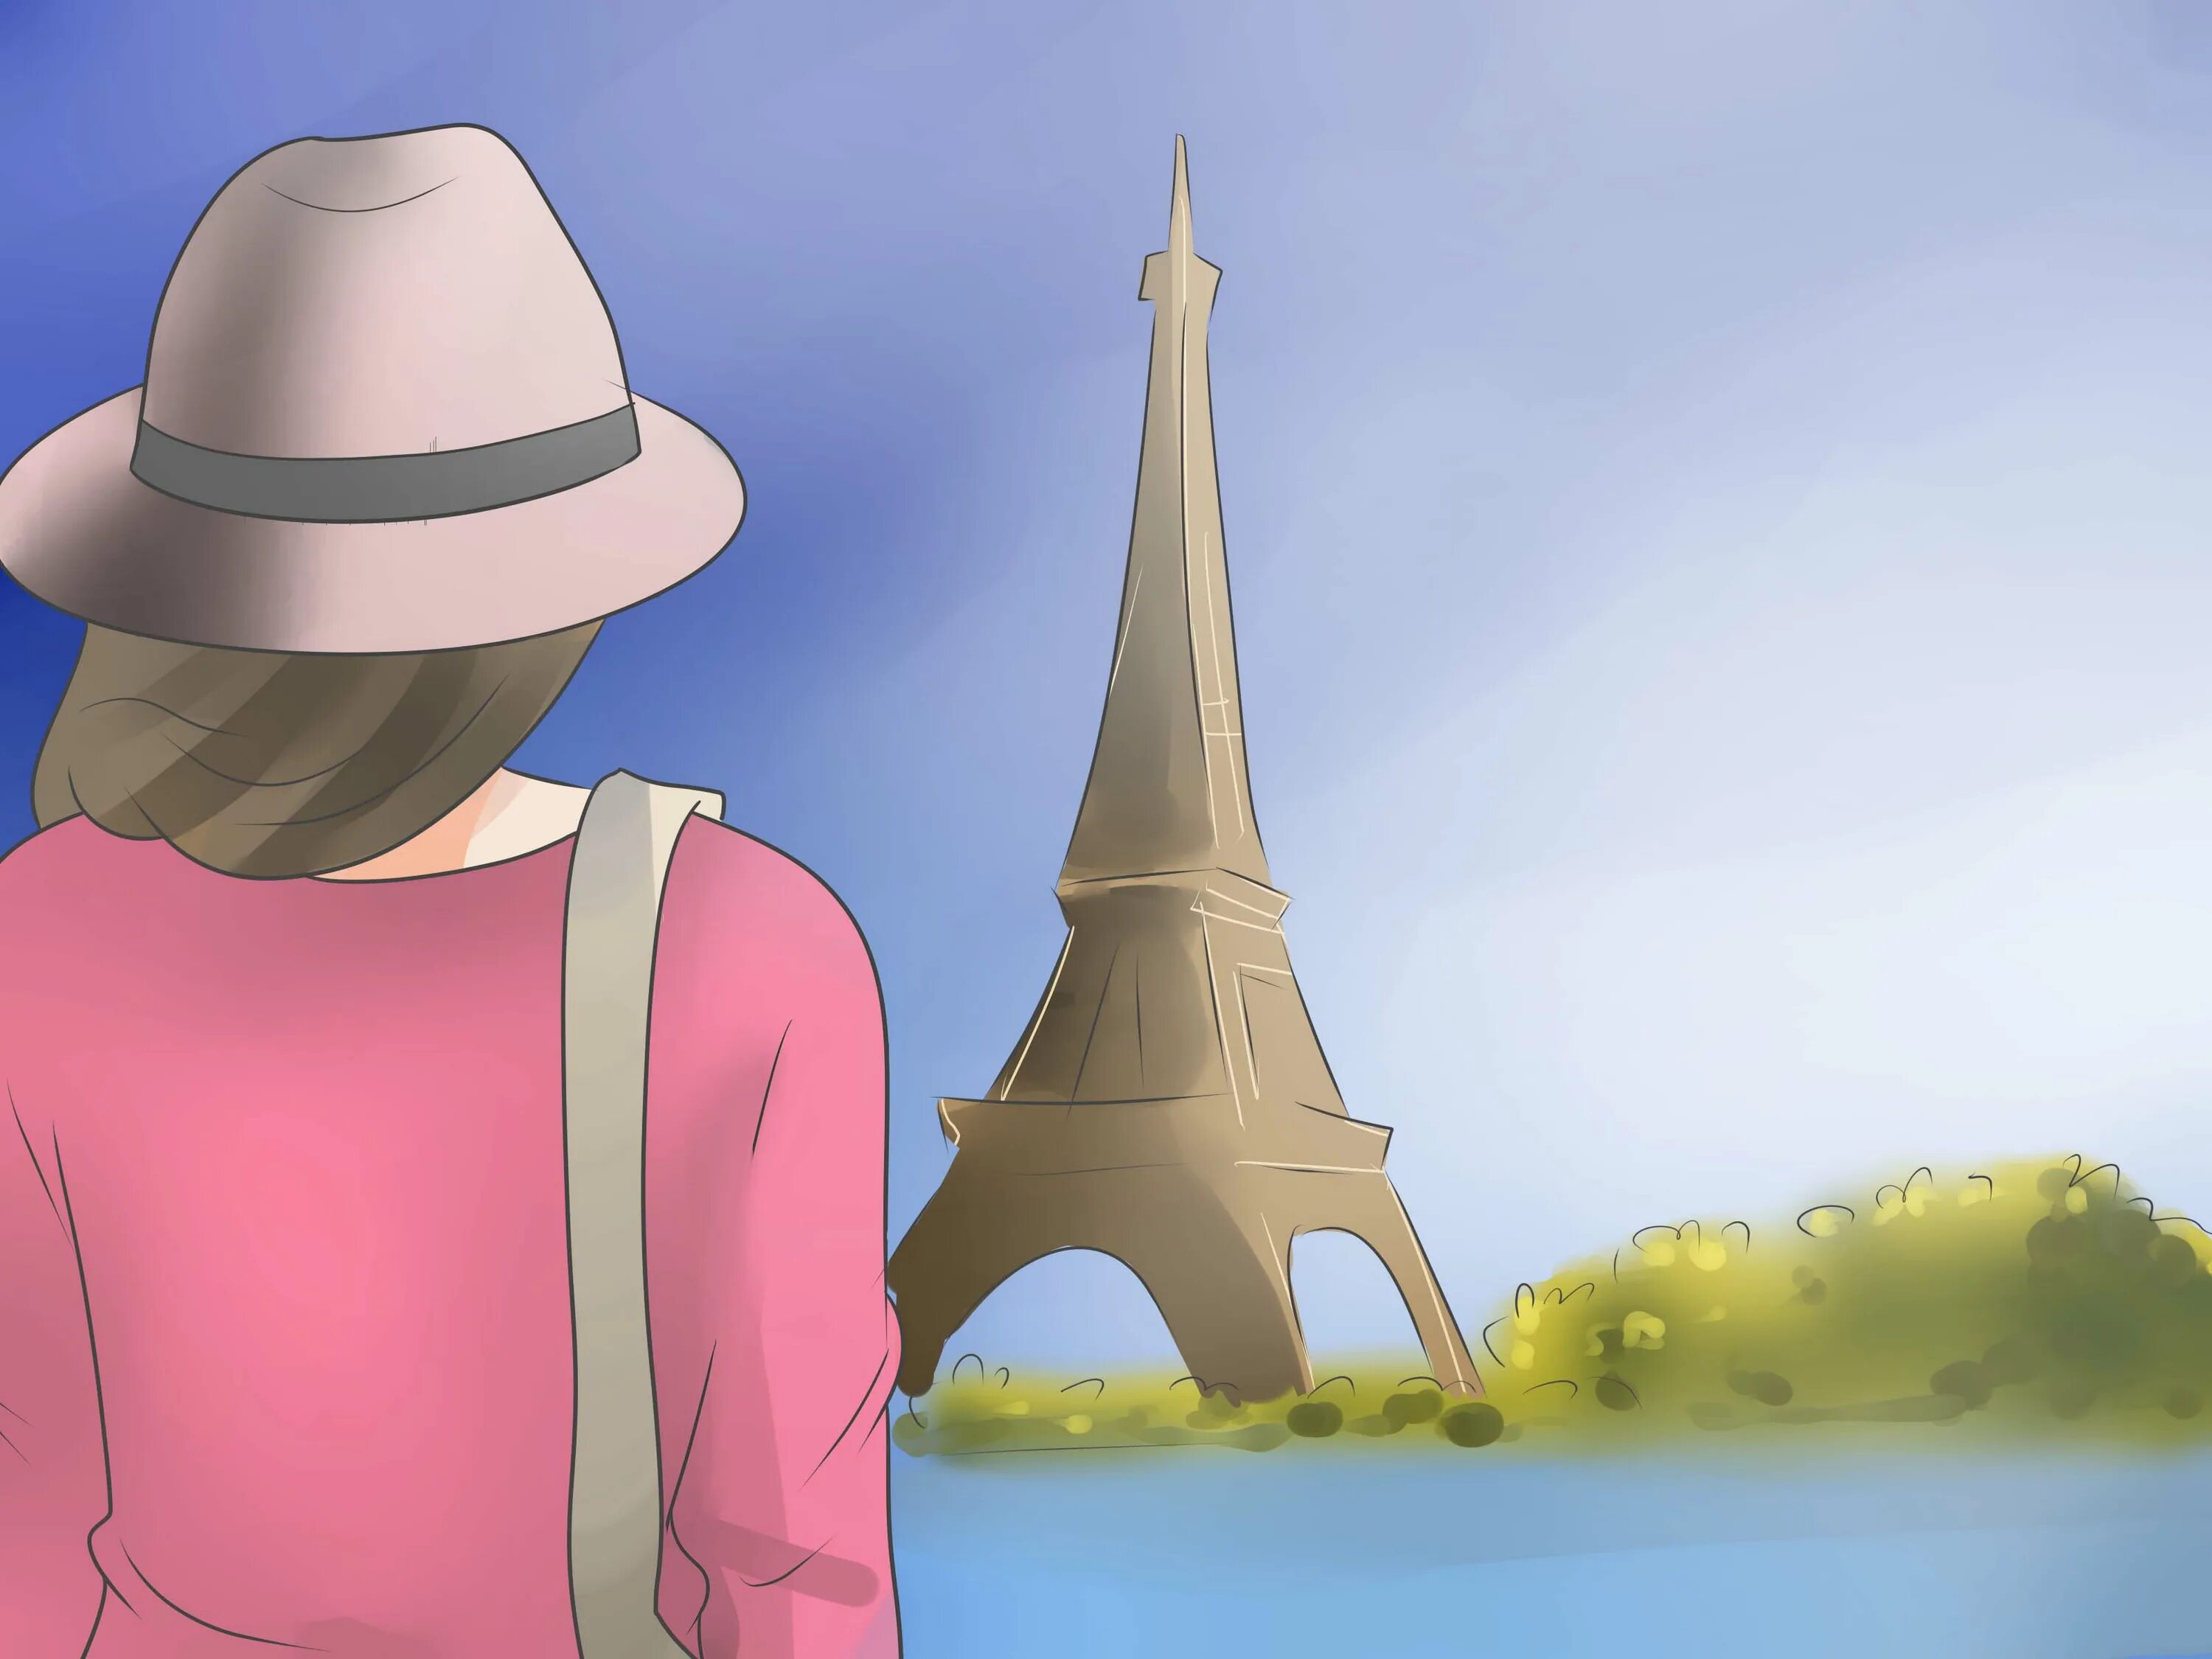 Француз сделать. Learn French. Французские картинки. How to learn French. Французский язык картинки раскраски.